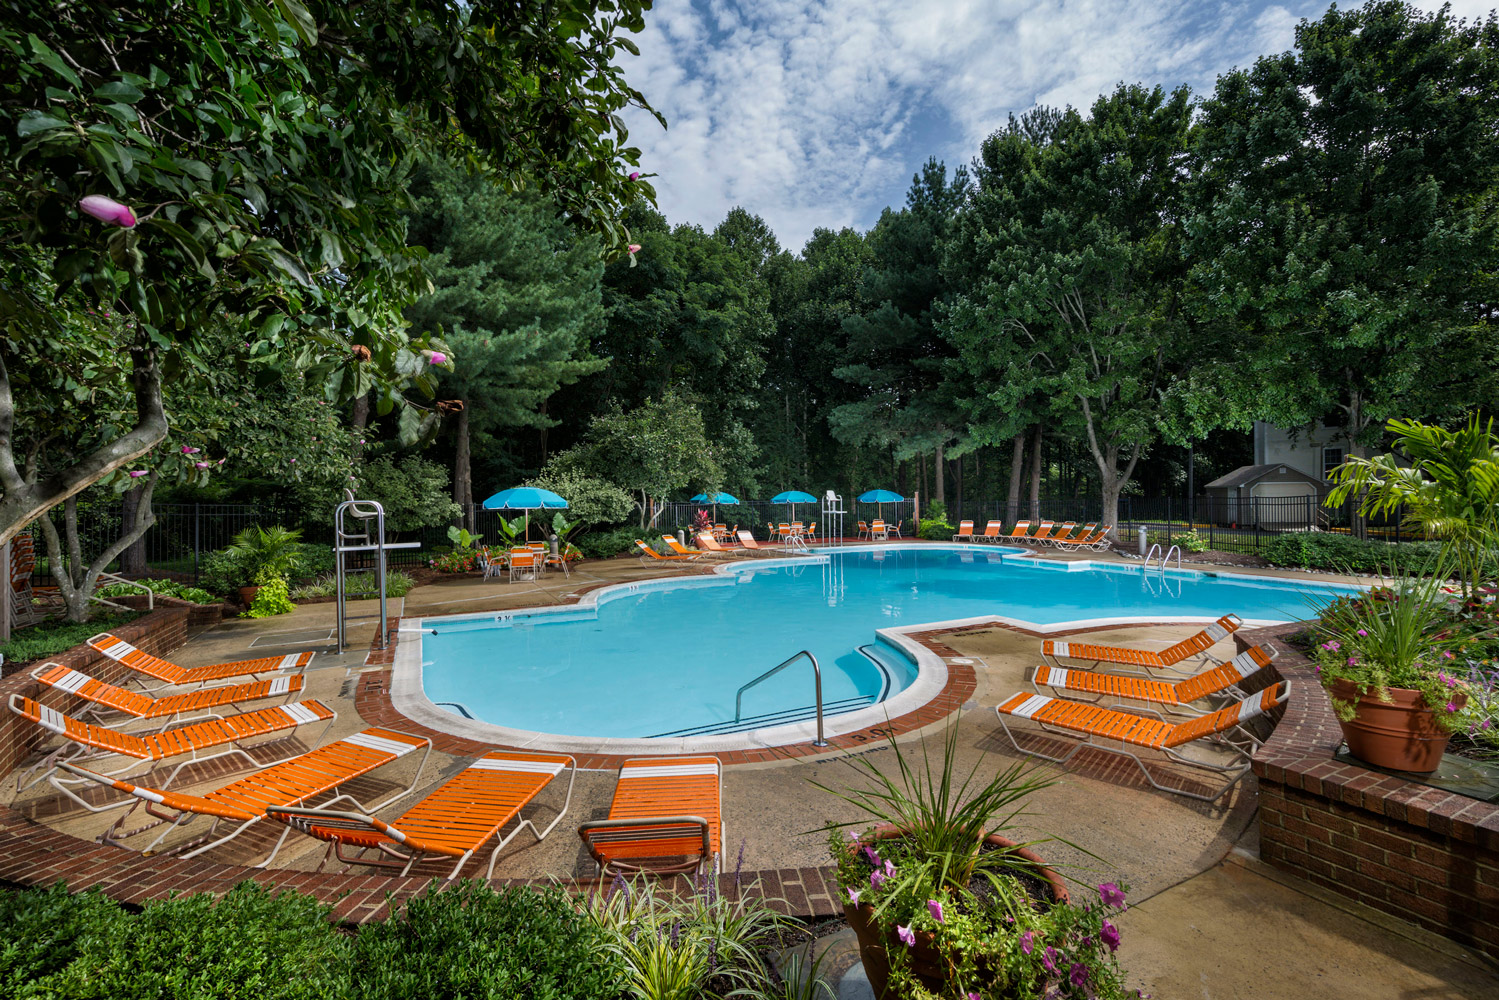 Relaxing swimming pool at Seneca Club Apartments in Germantown, MD